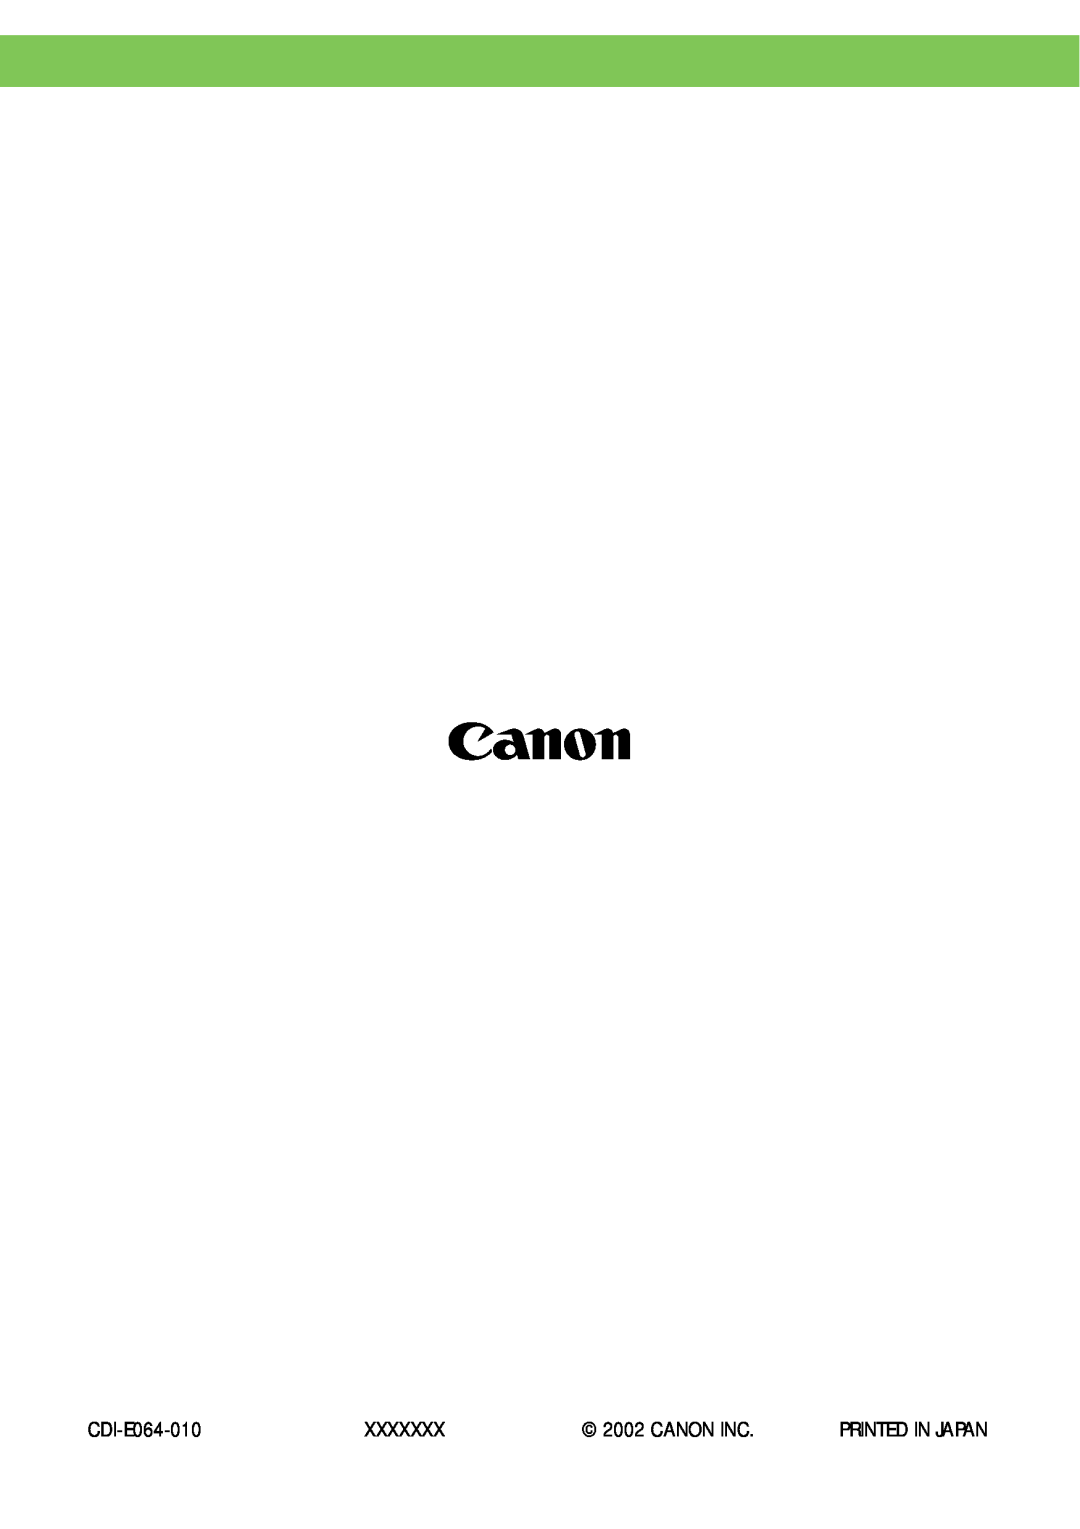 Canon PowerShot S45 manual CDI-E064-010, Xxxxxxx, Canon Inc, Printed In Japan 